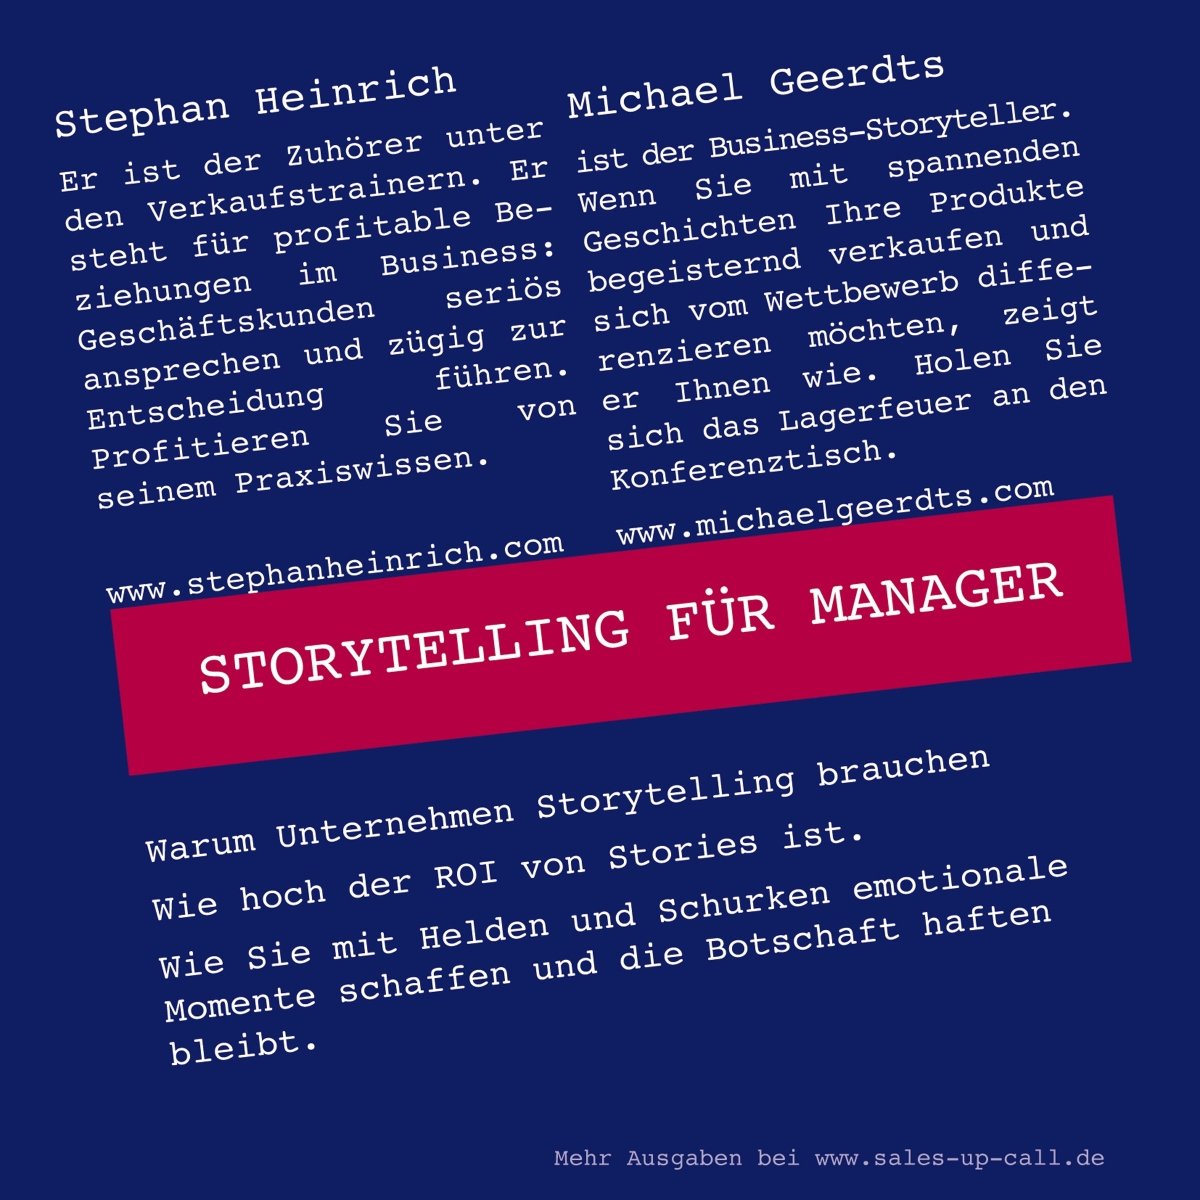 Storytelling für Manager - Sales-up-Call - Stephan Heinrich